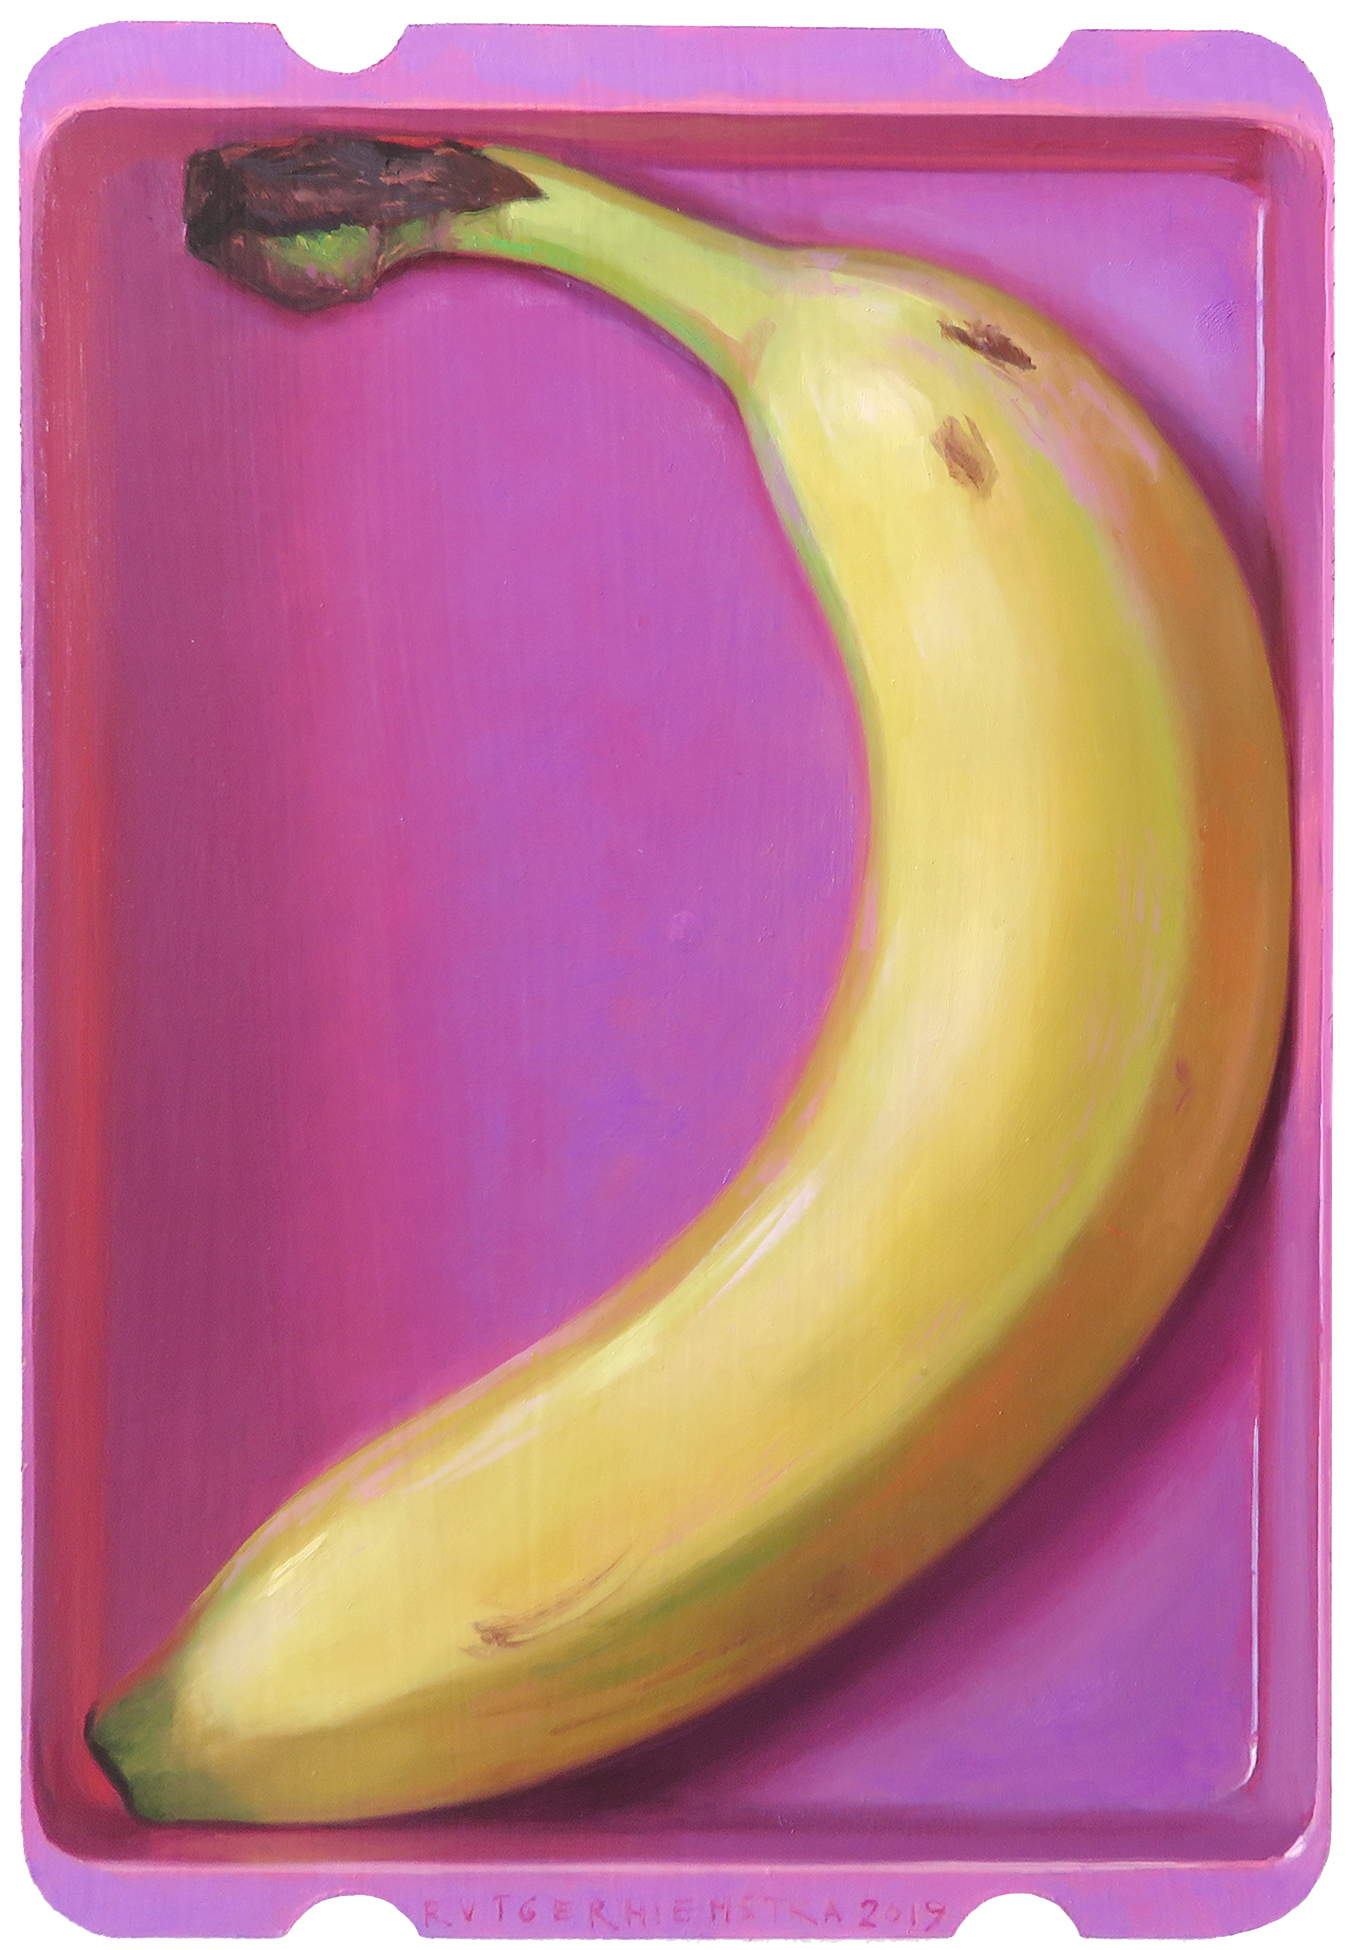 verklaren Raad Bezem Lunchbox Banana roze - Galerie Bonnard